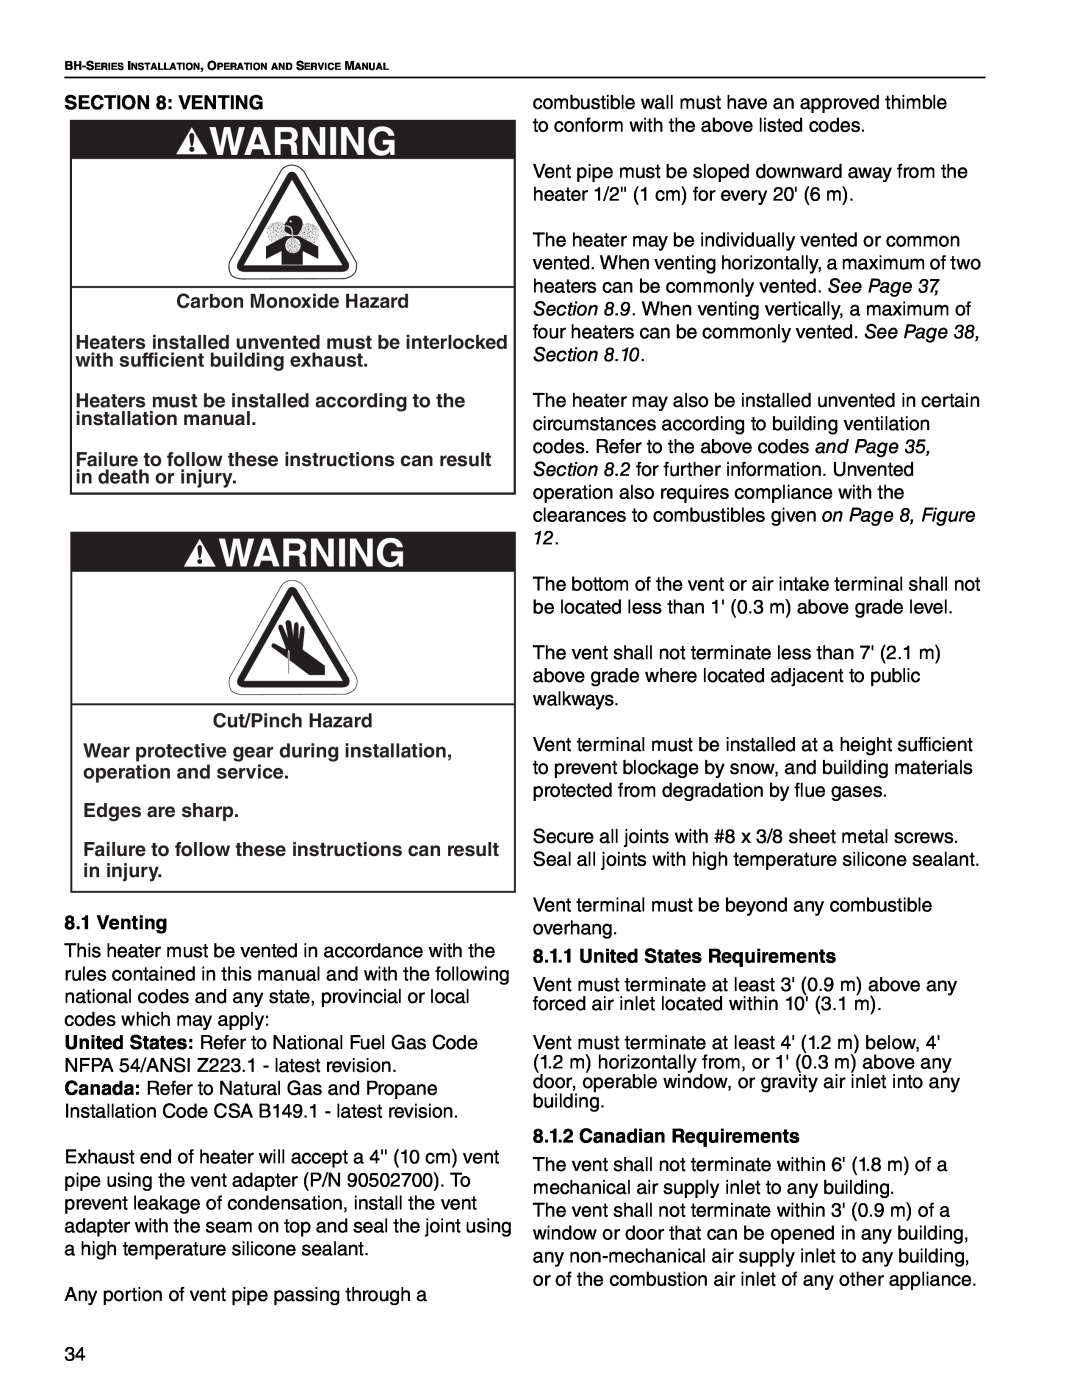 Roberts Gorden Linear Heater Venting, Carbon Monoxide Hazard, Cut/Pinch Hazard, Edges are sharp, Canadian Requirements 